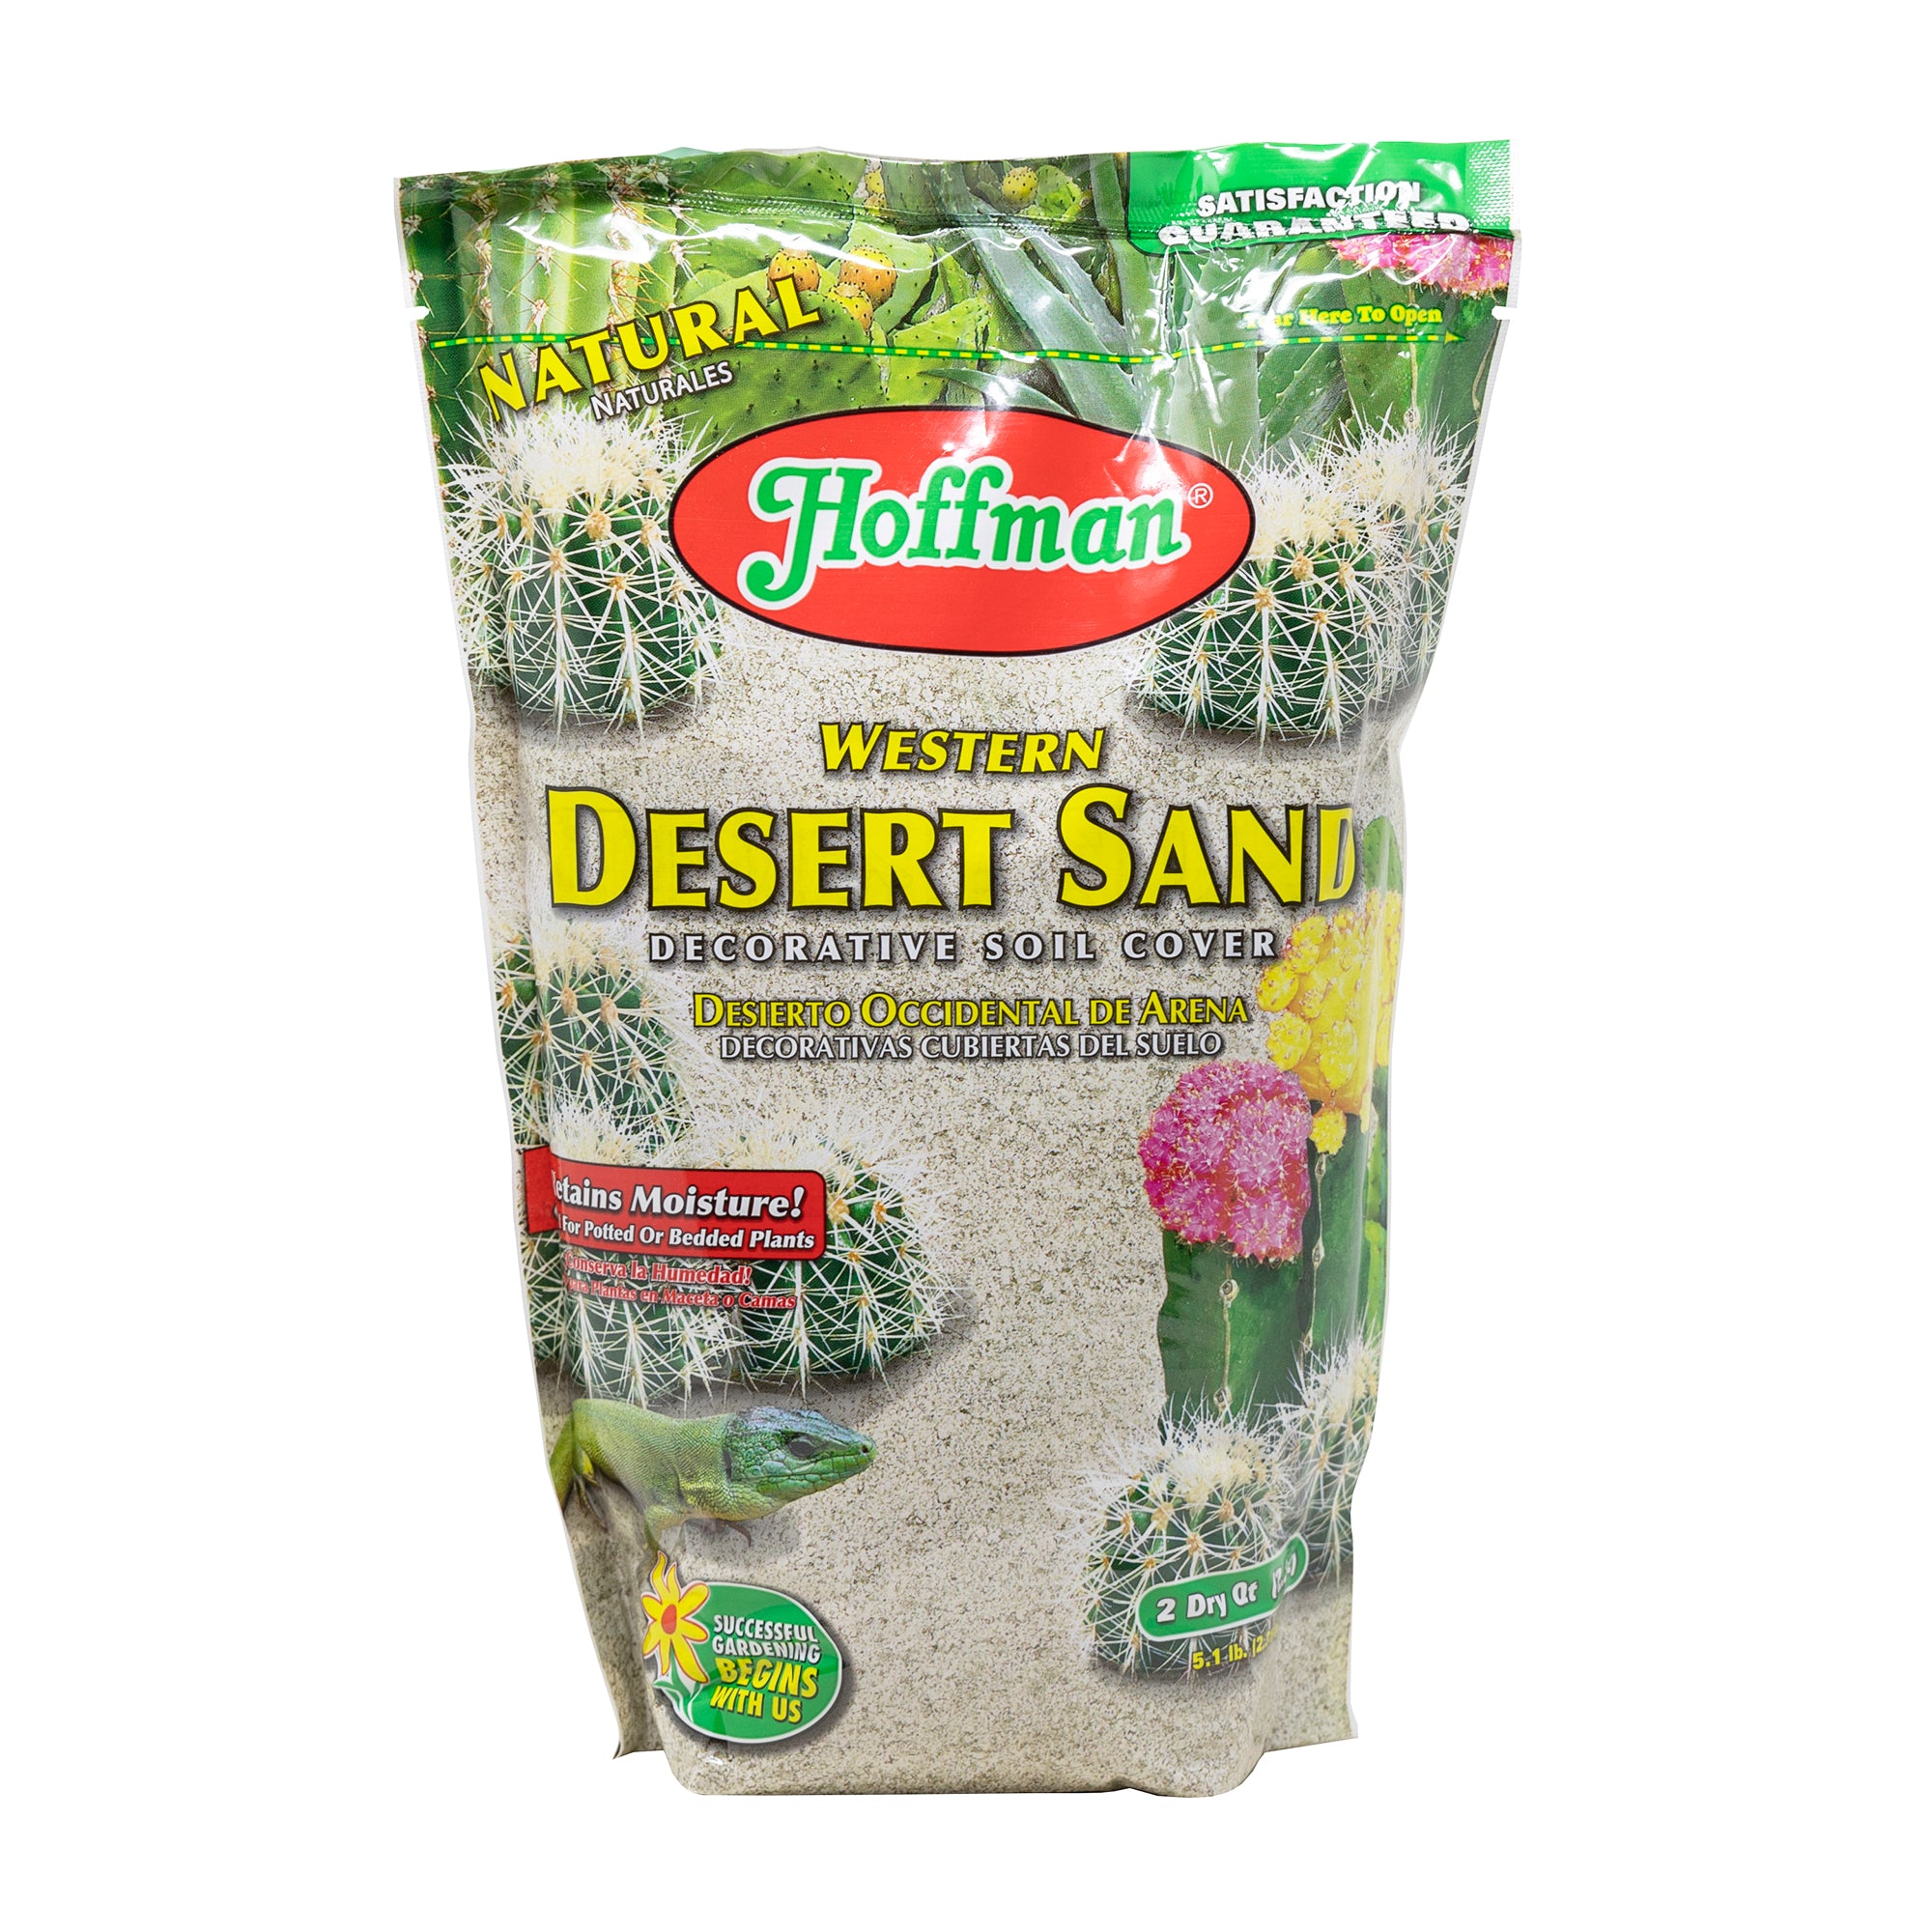 Hoffman Western Desert Sand Decorative Soil Cover, 2 Quart Bag